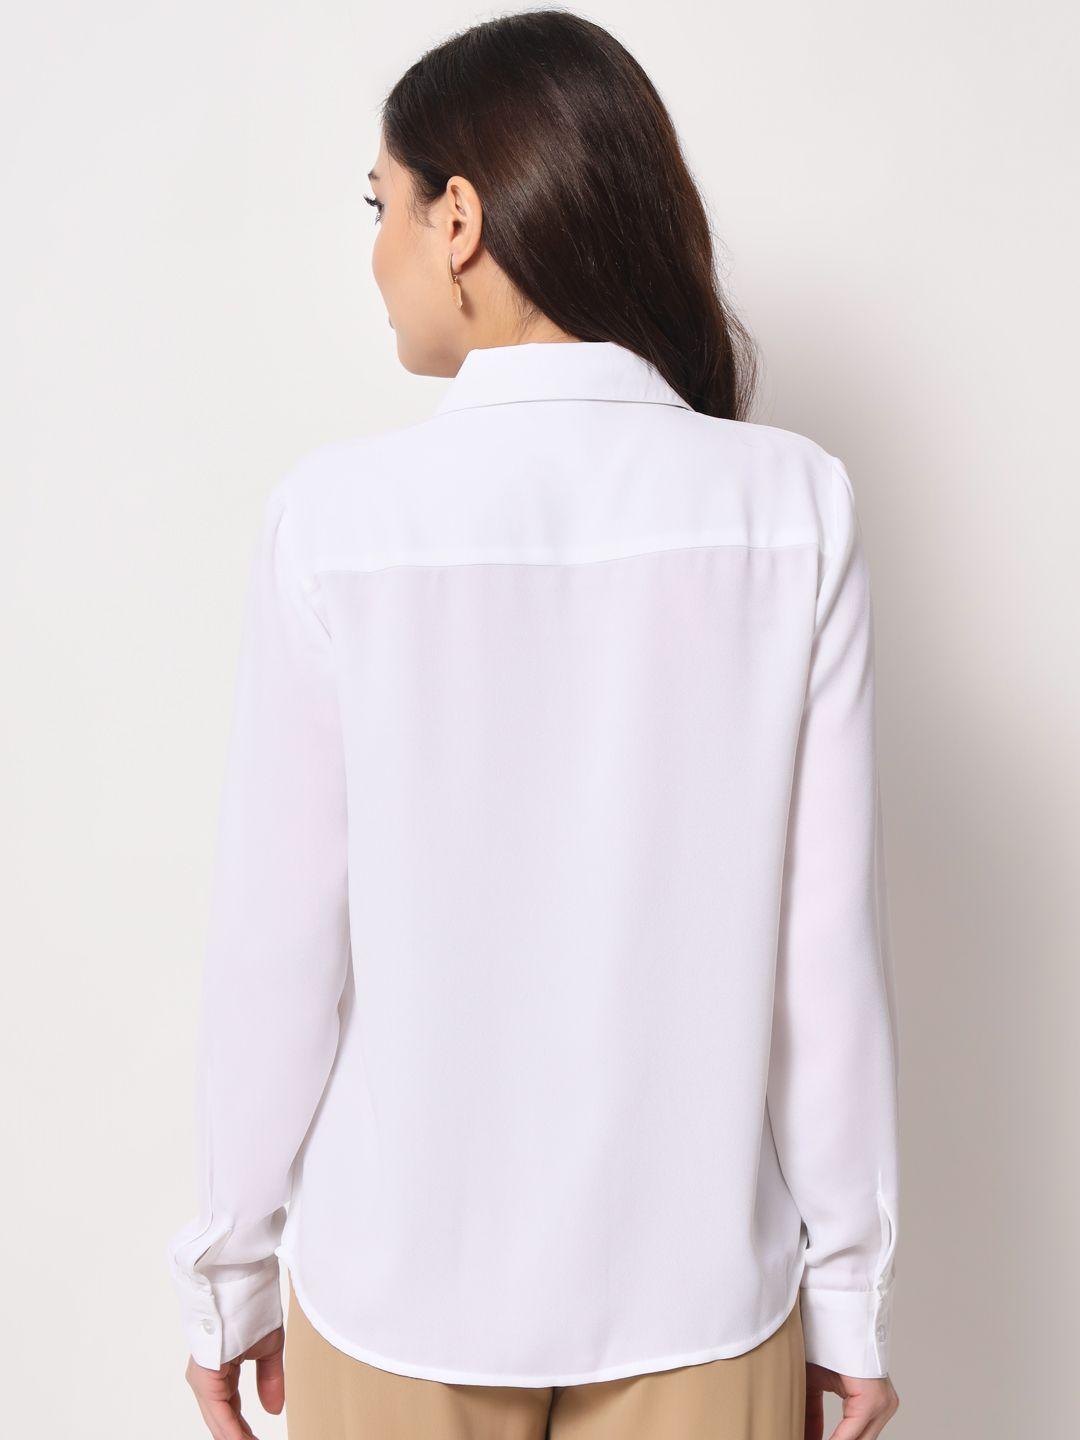 TRENDARREST Women's Polyester White Shirt with Metallic Collar Edges